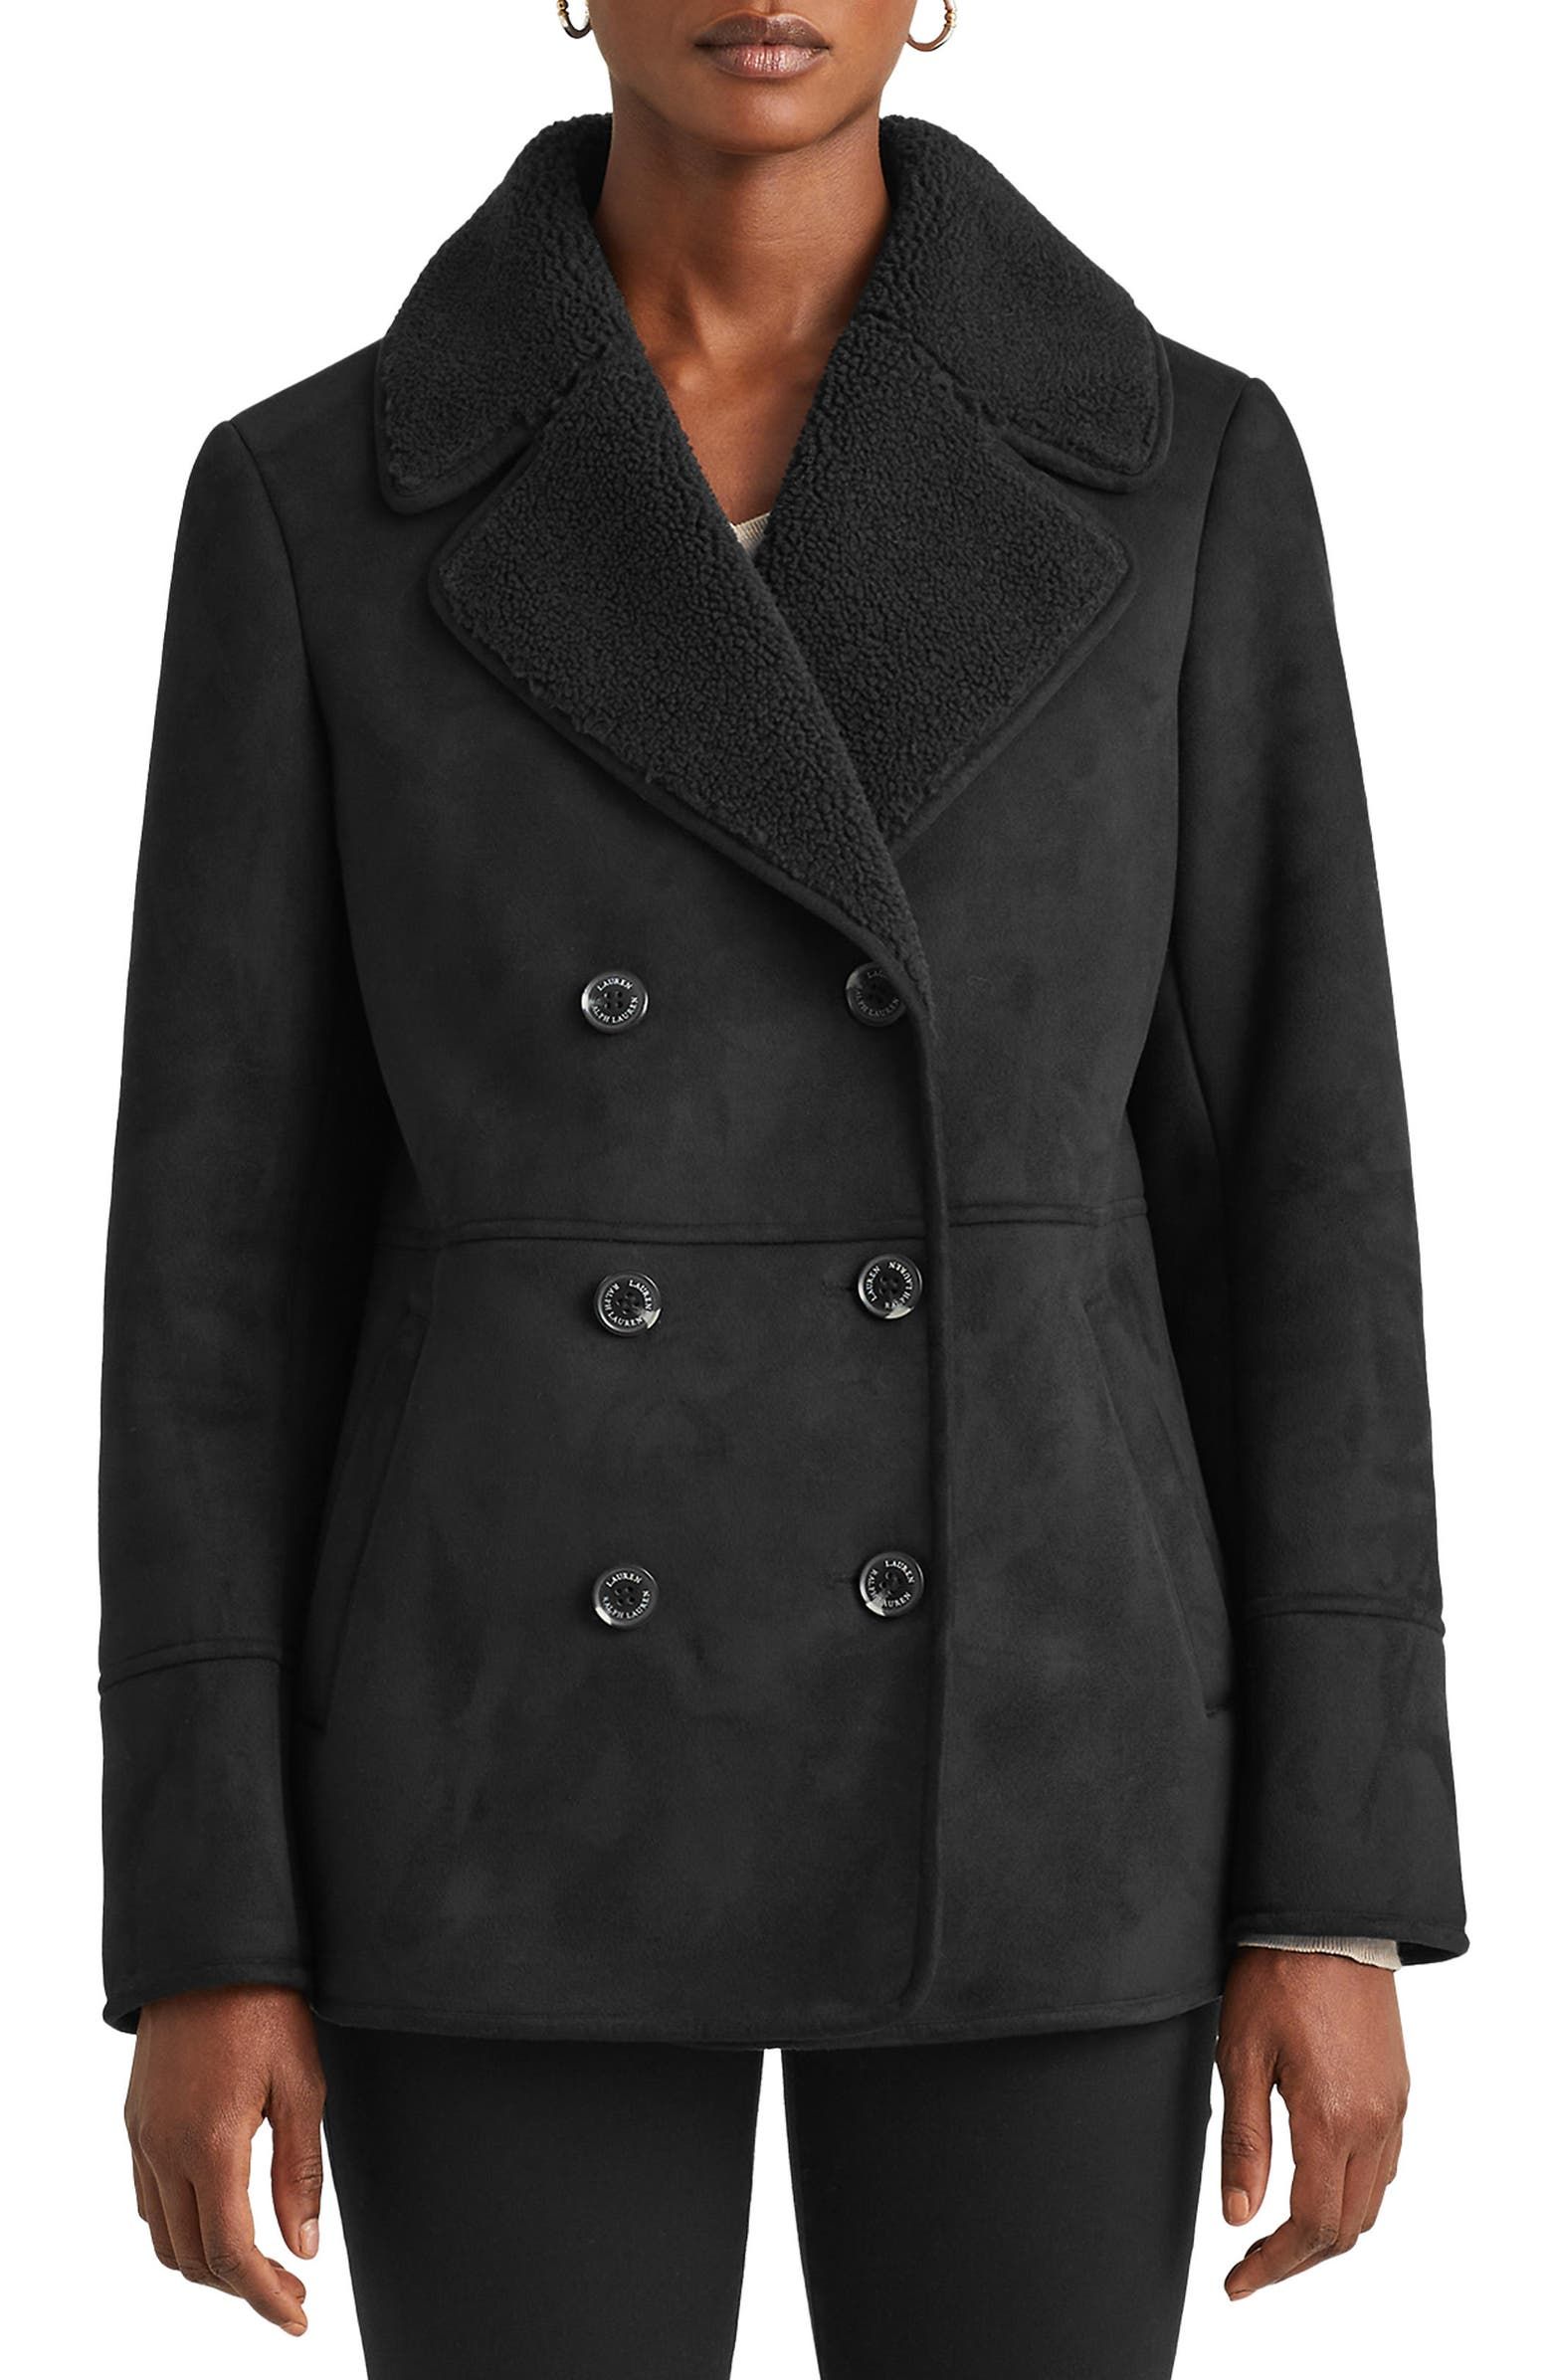 vintage Suede Jacket mens Size UK 40 EU 50 M Coat Man Jacke Men Winter faux sherpa Brown Double Breasted England